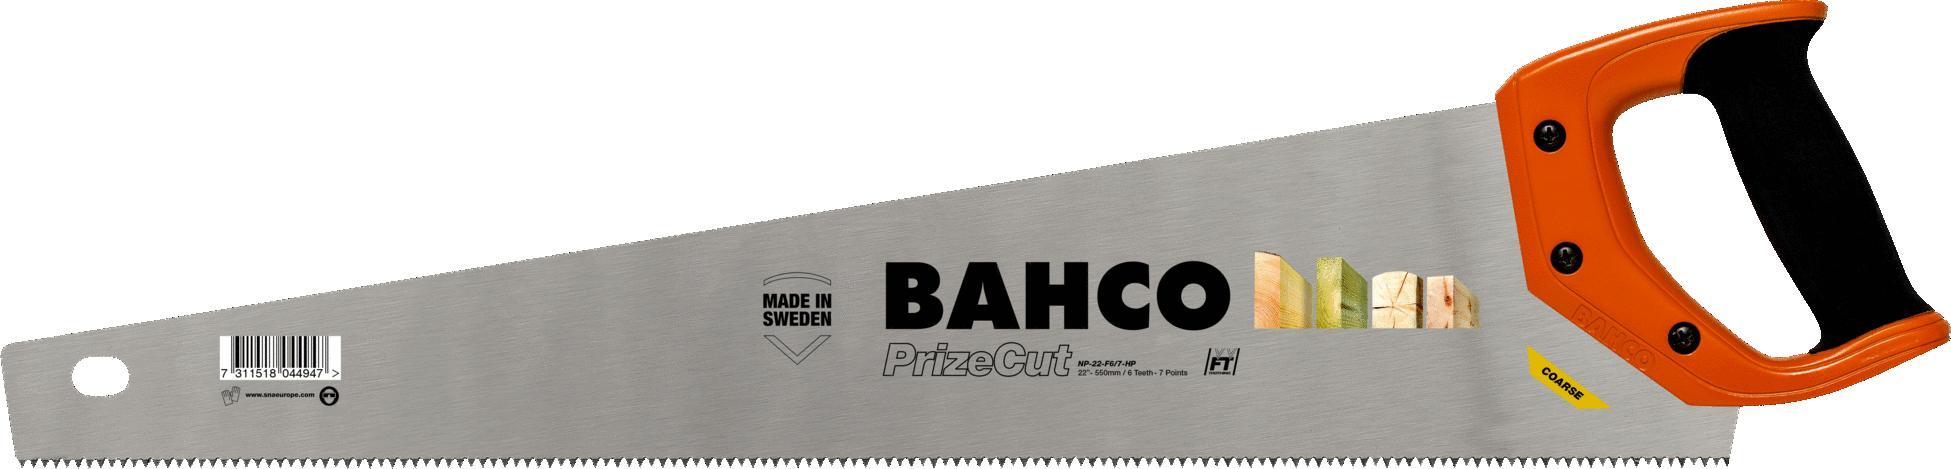 Bahco BAHCO PILA RECZNA 550MM CROSSCUT NP-FLEEM BAHNP-22-F7-8-HP BAHCO